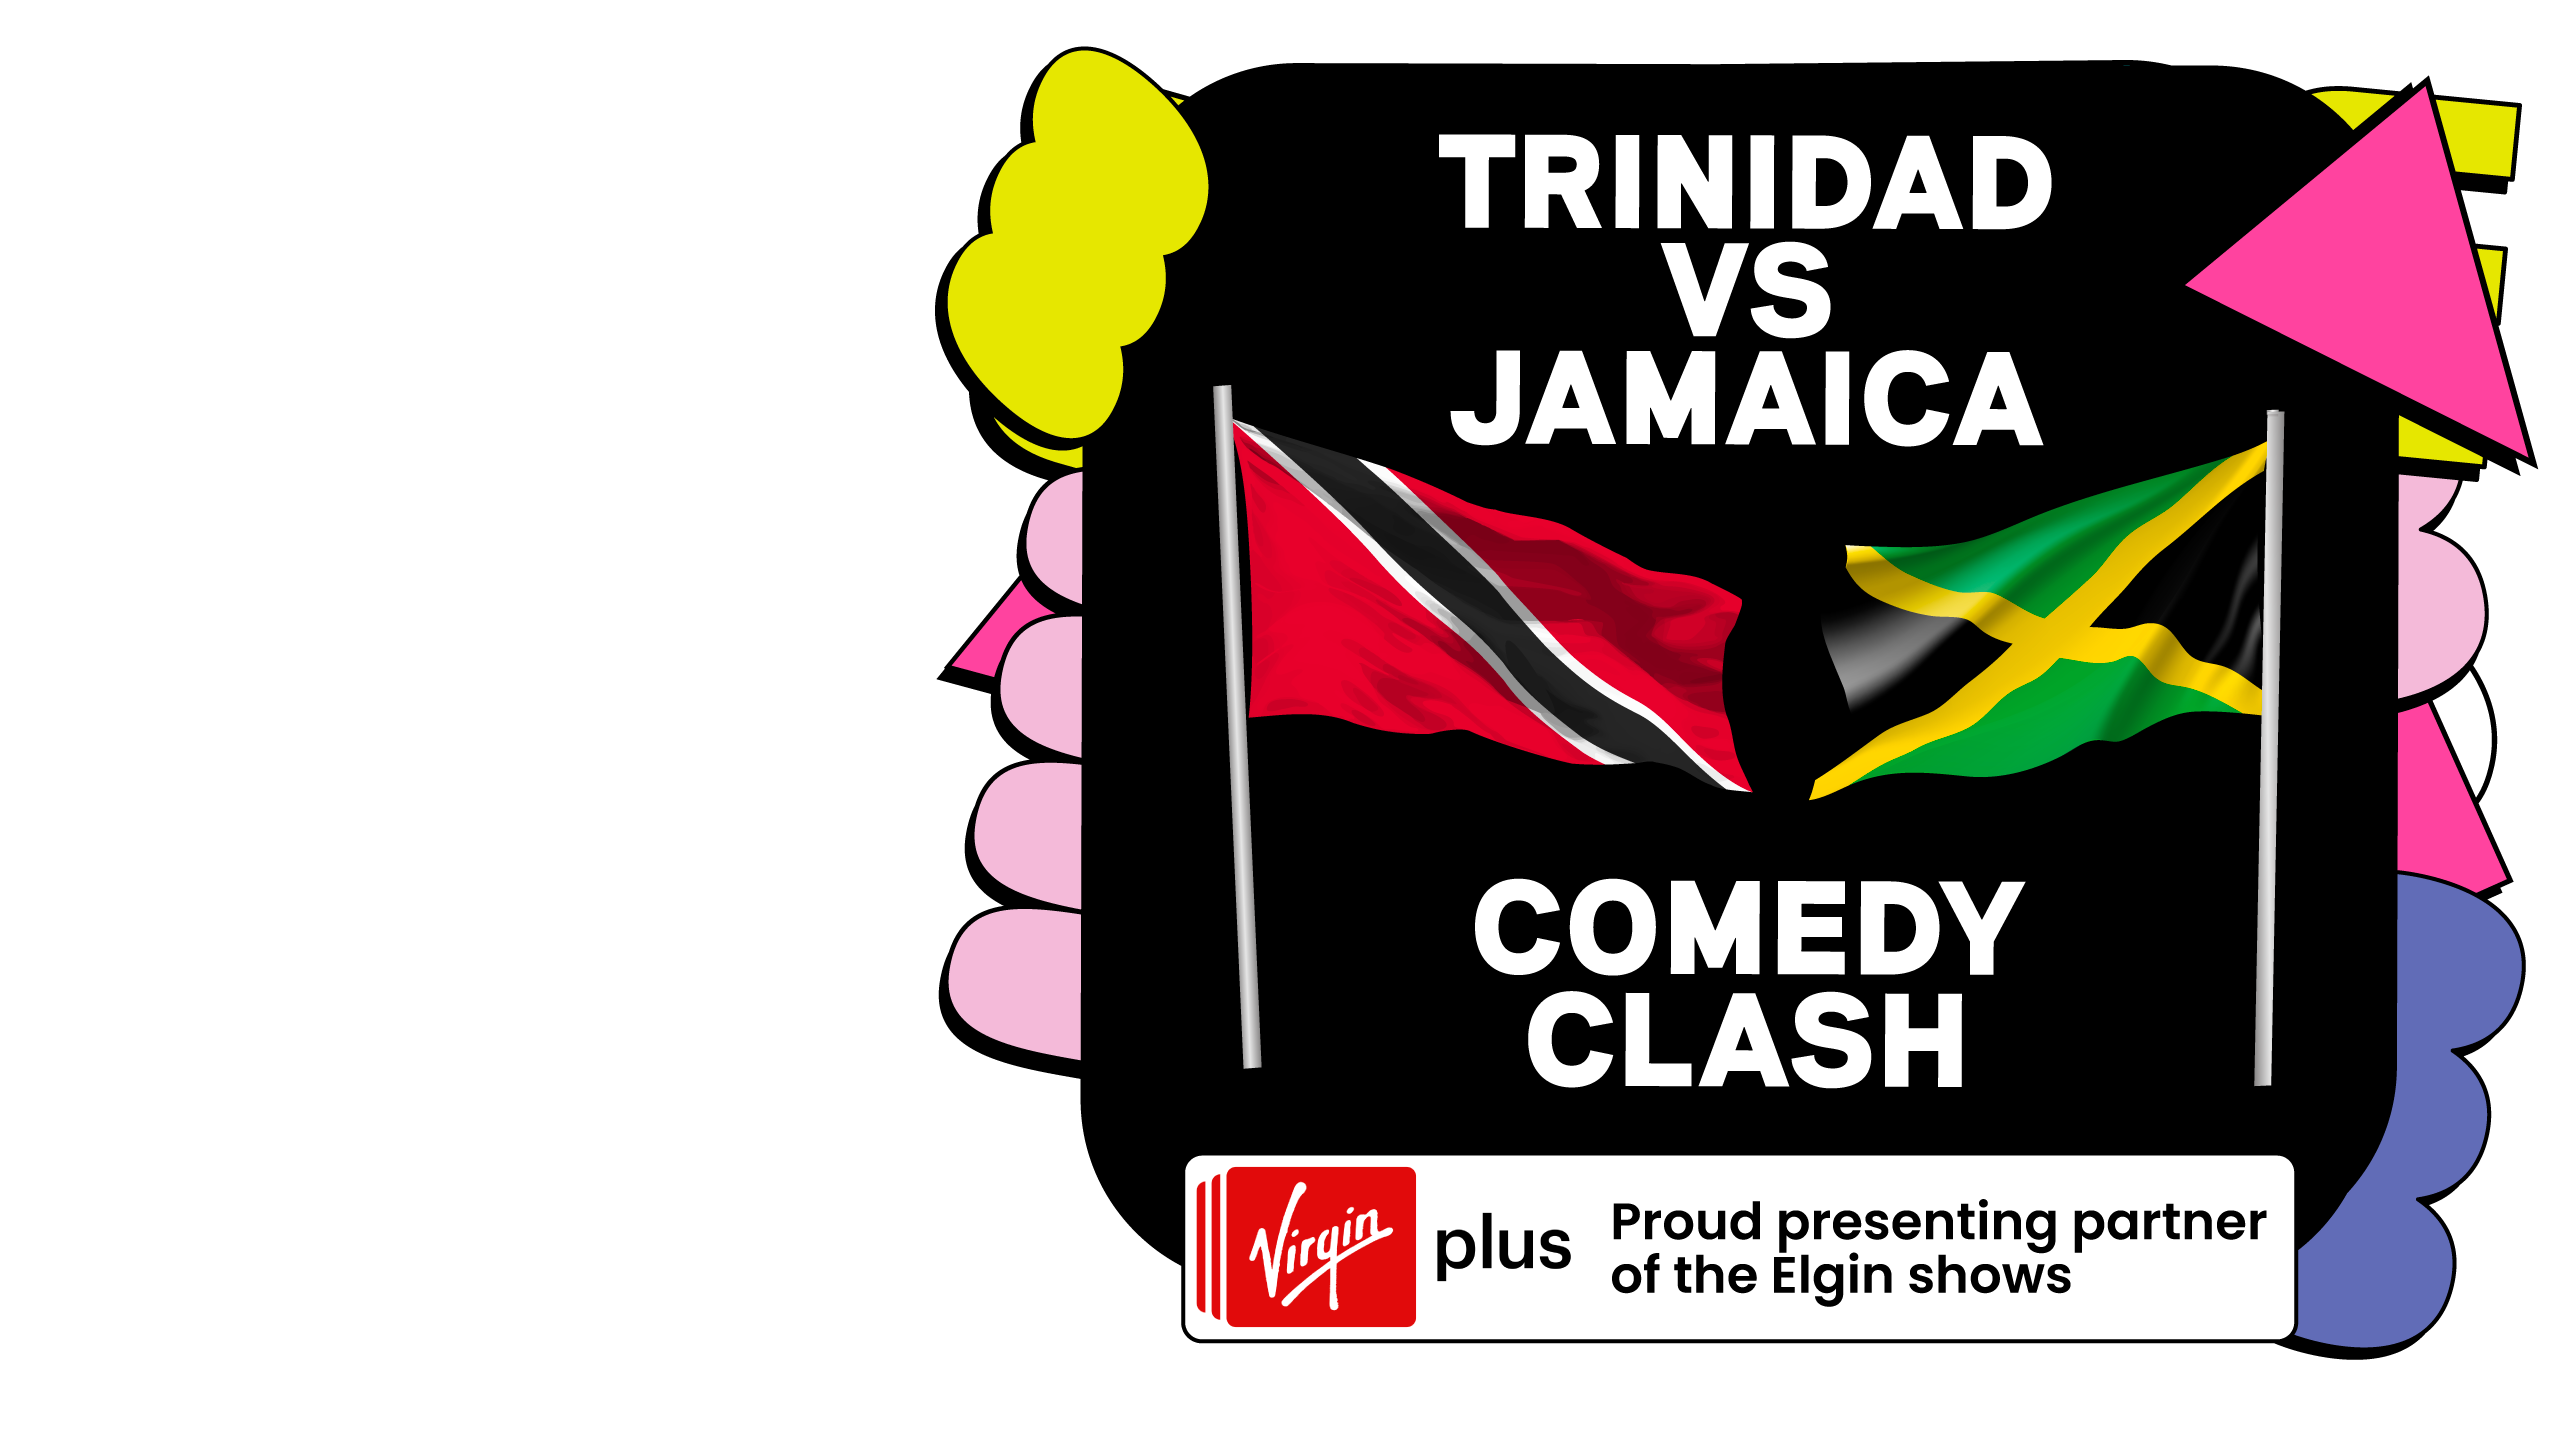 Promotional image for Trinidad vs. Jamaica  Comedy Clash